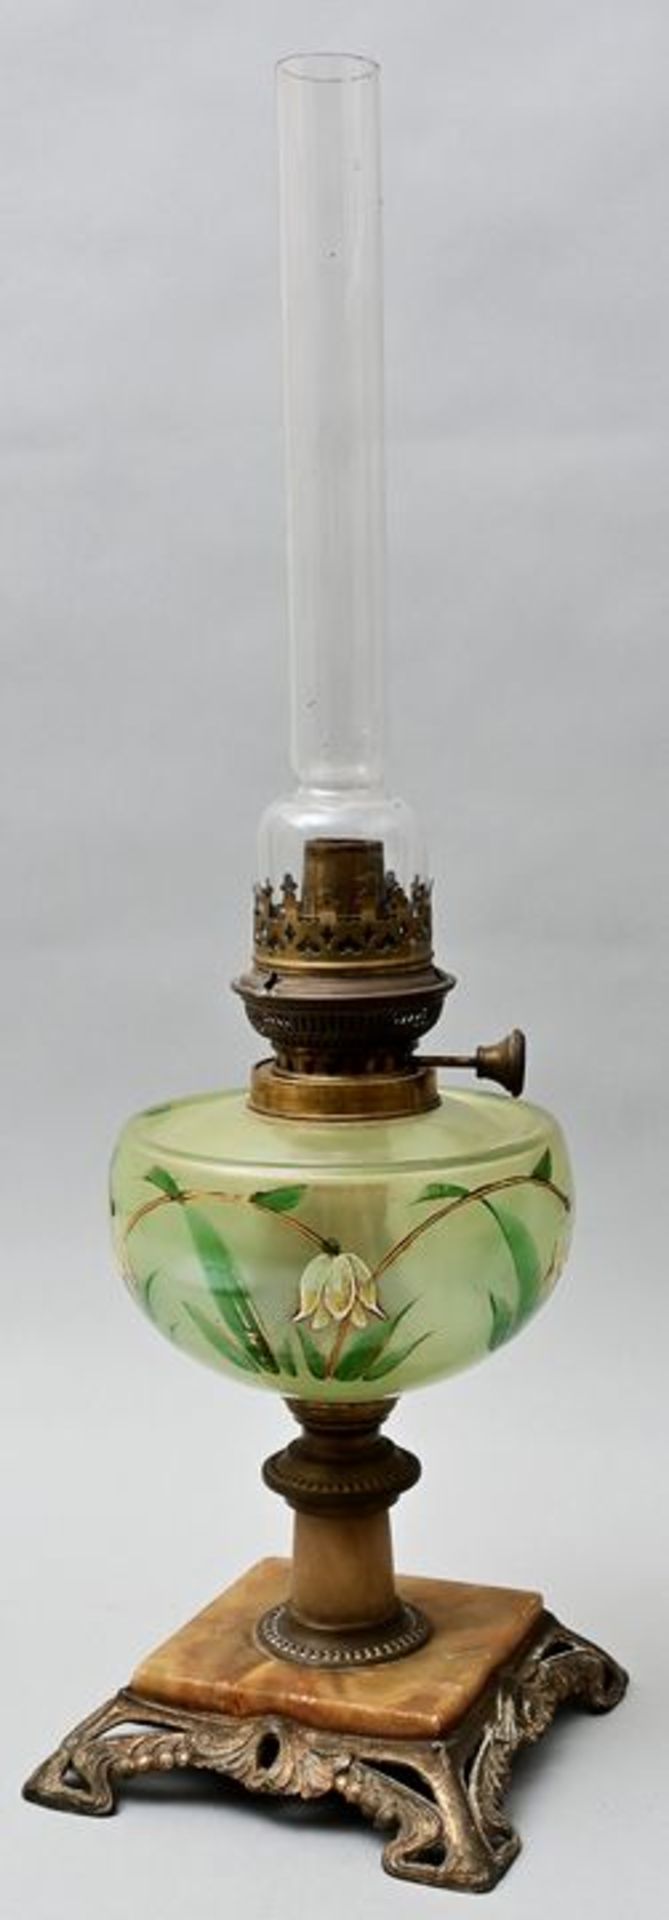 Petroleumlampe/ oil lamp